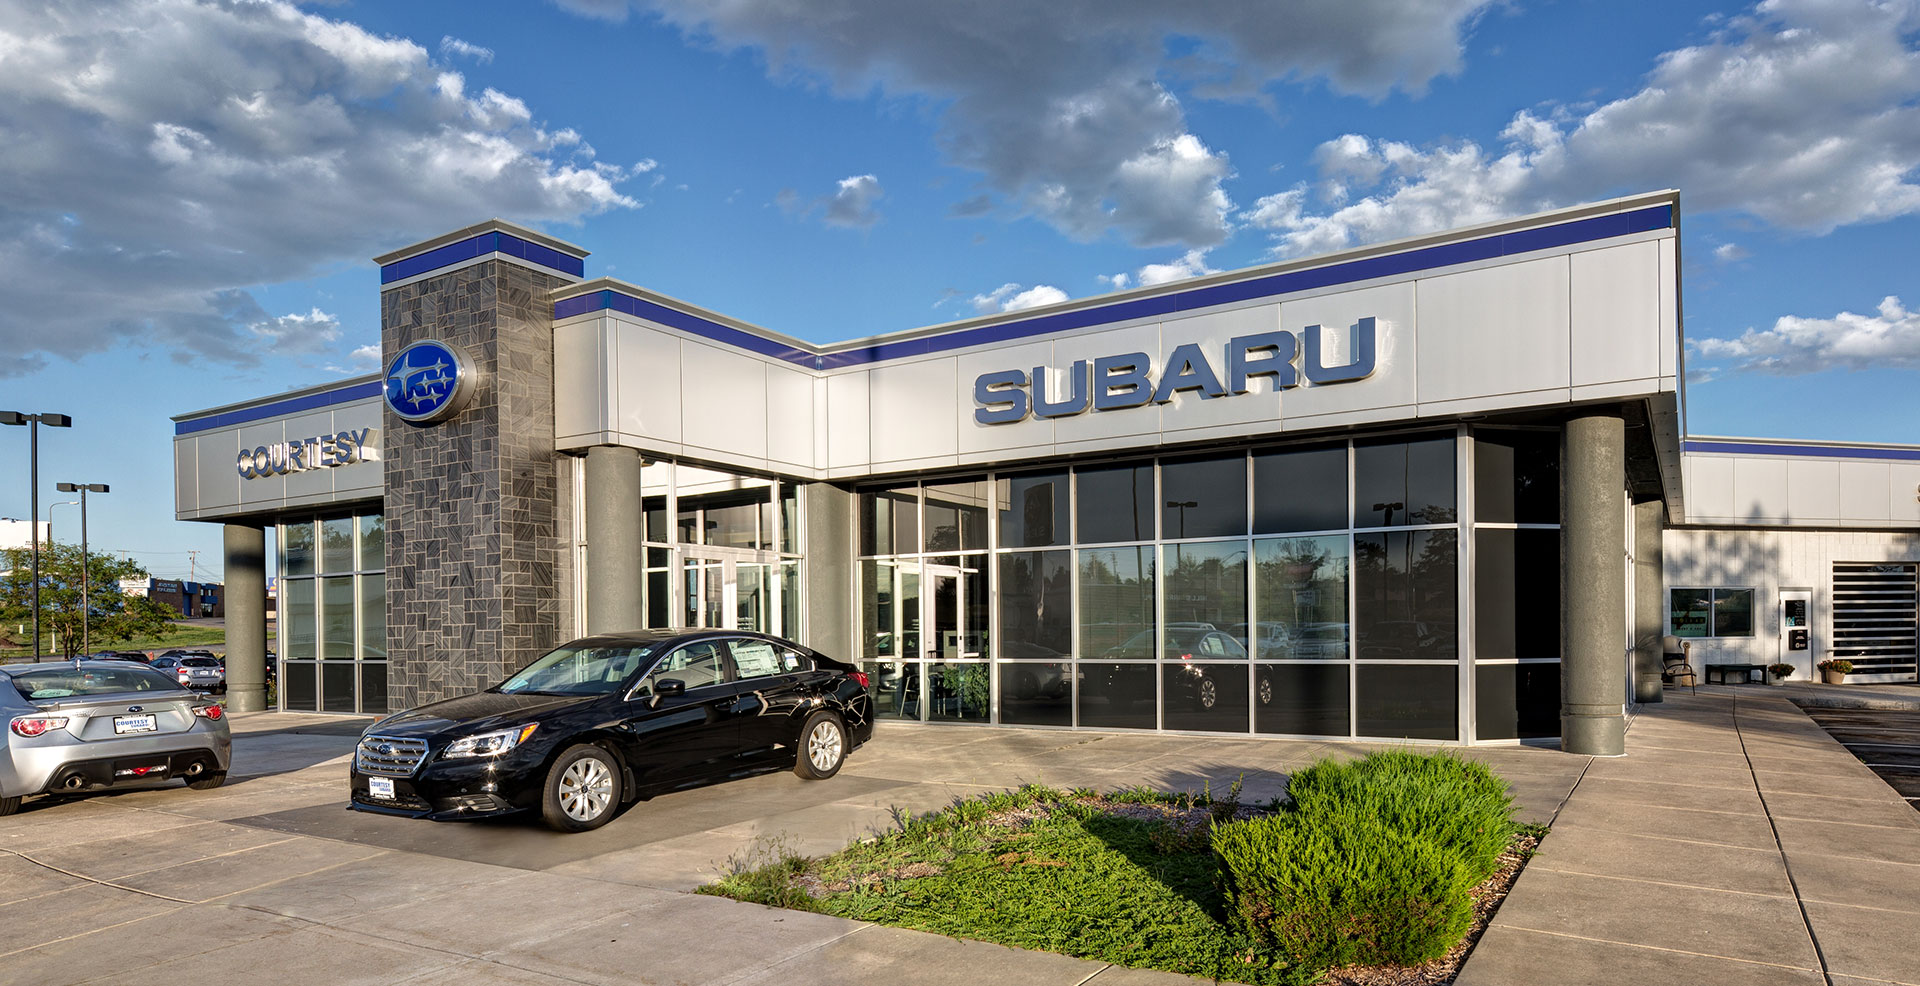 Image for Courtesy Subaru New Facility